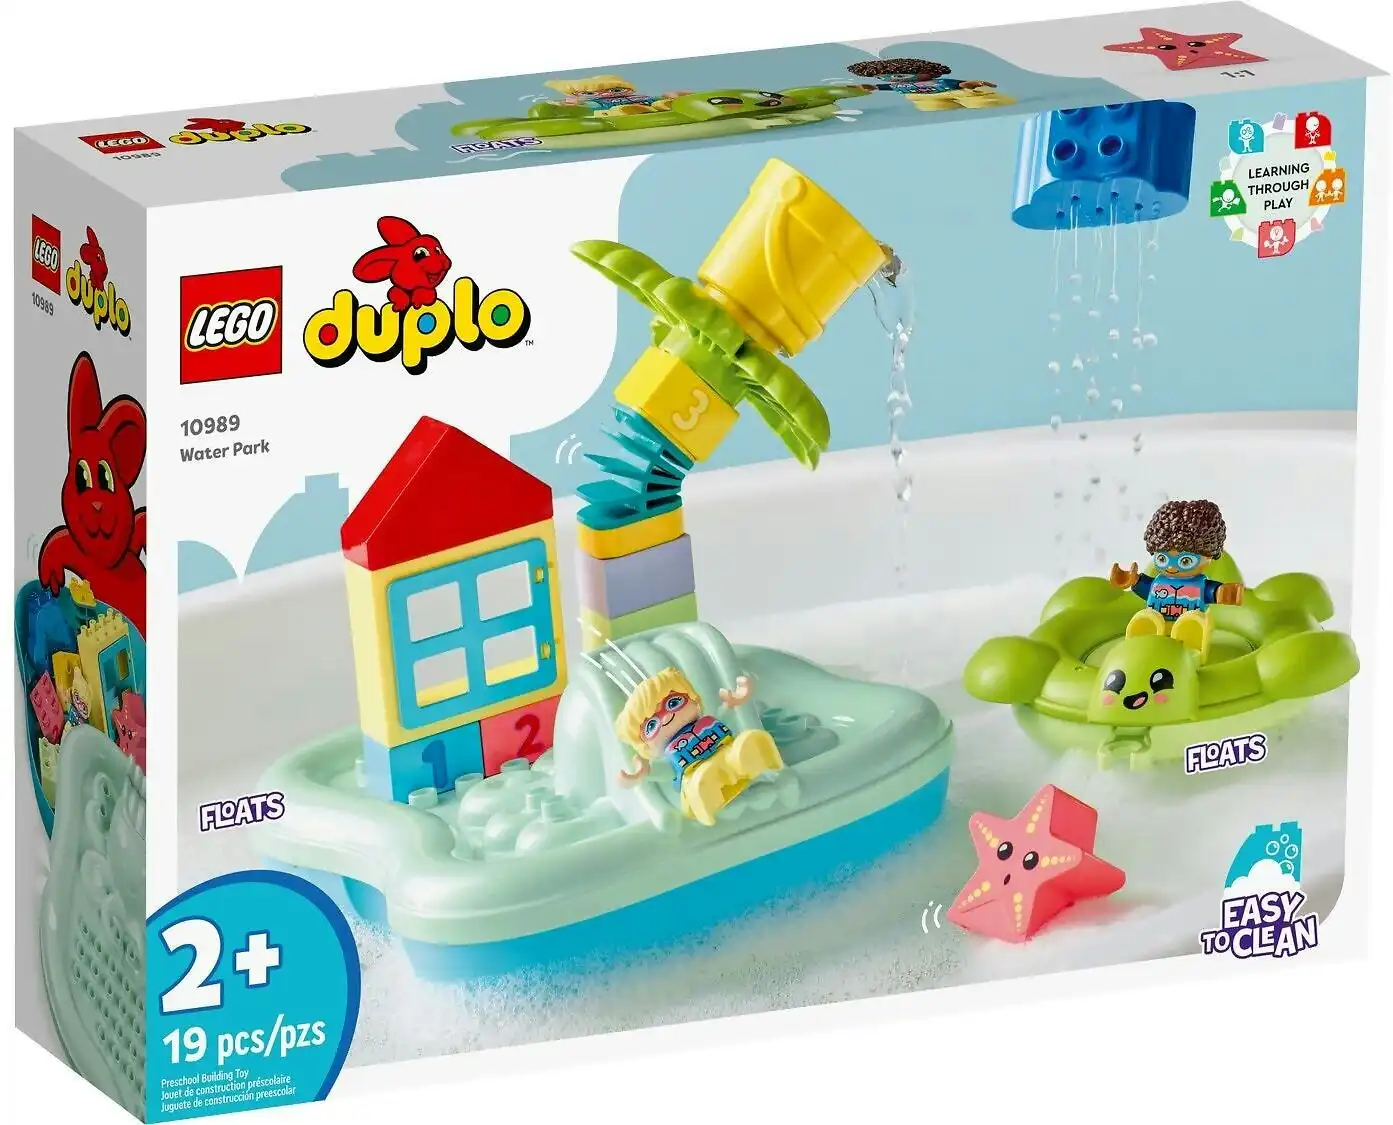 LEGO 10989 Water Park - Duplo